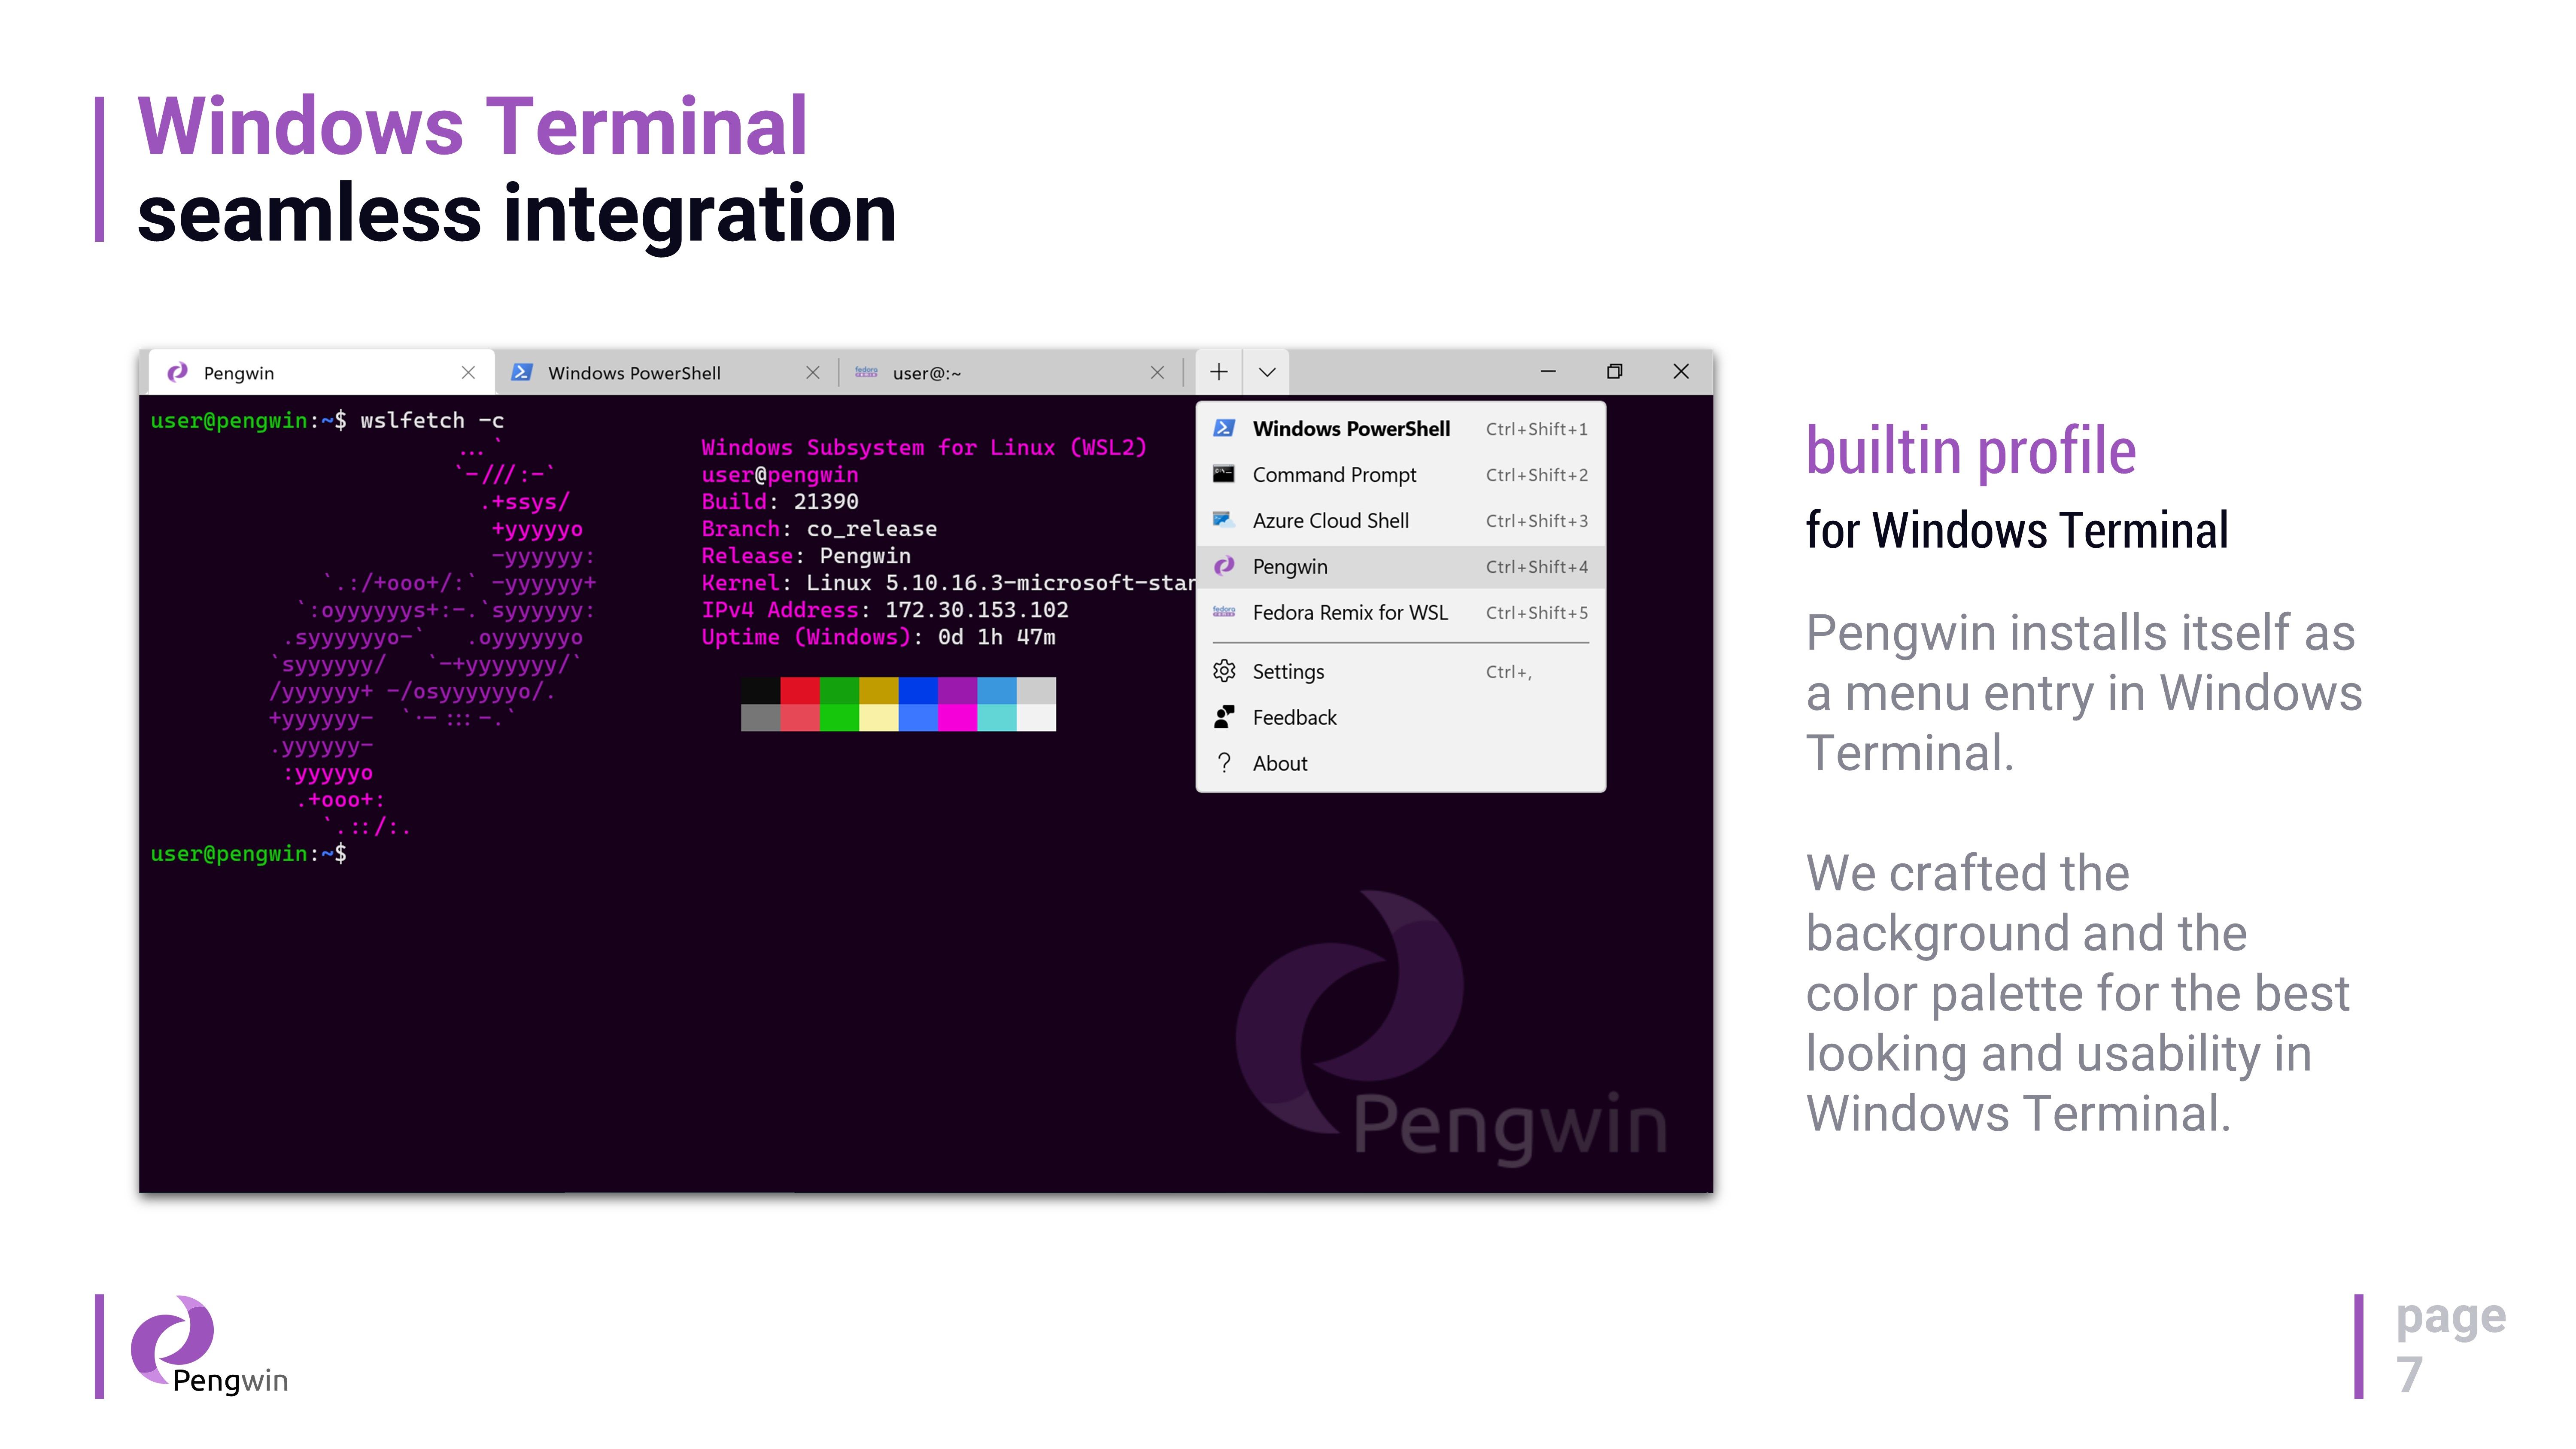 Windows Terminal seamless integration